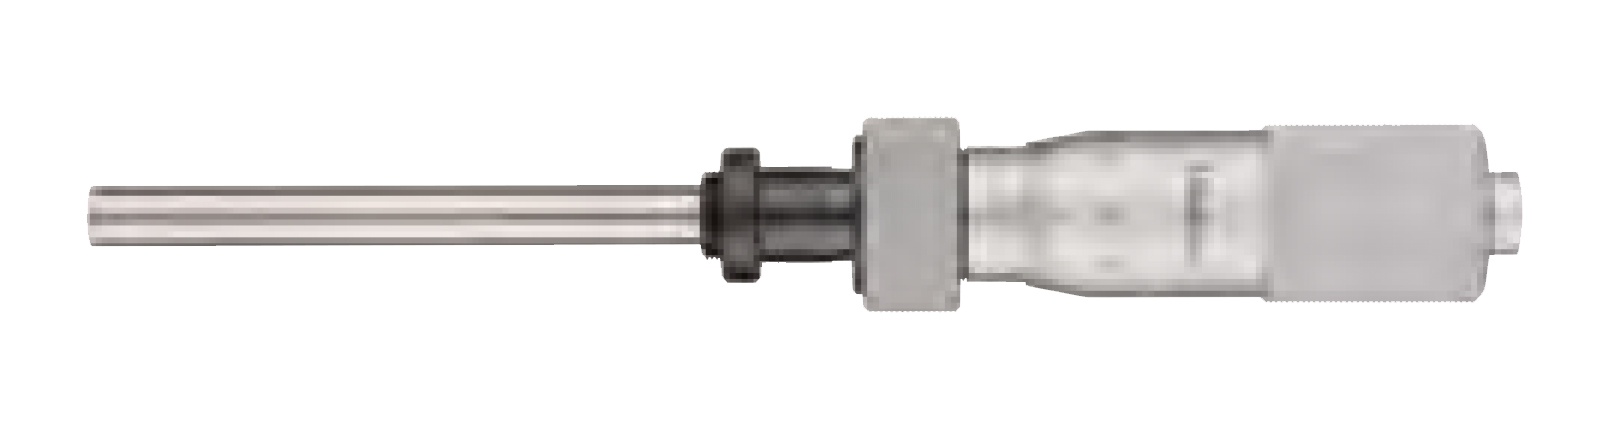 Micrometer Heads SERIES 150 — Medium-sized Standard Type (150-223) 